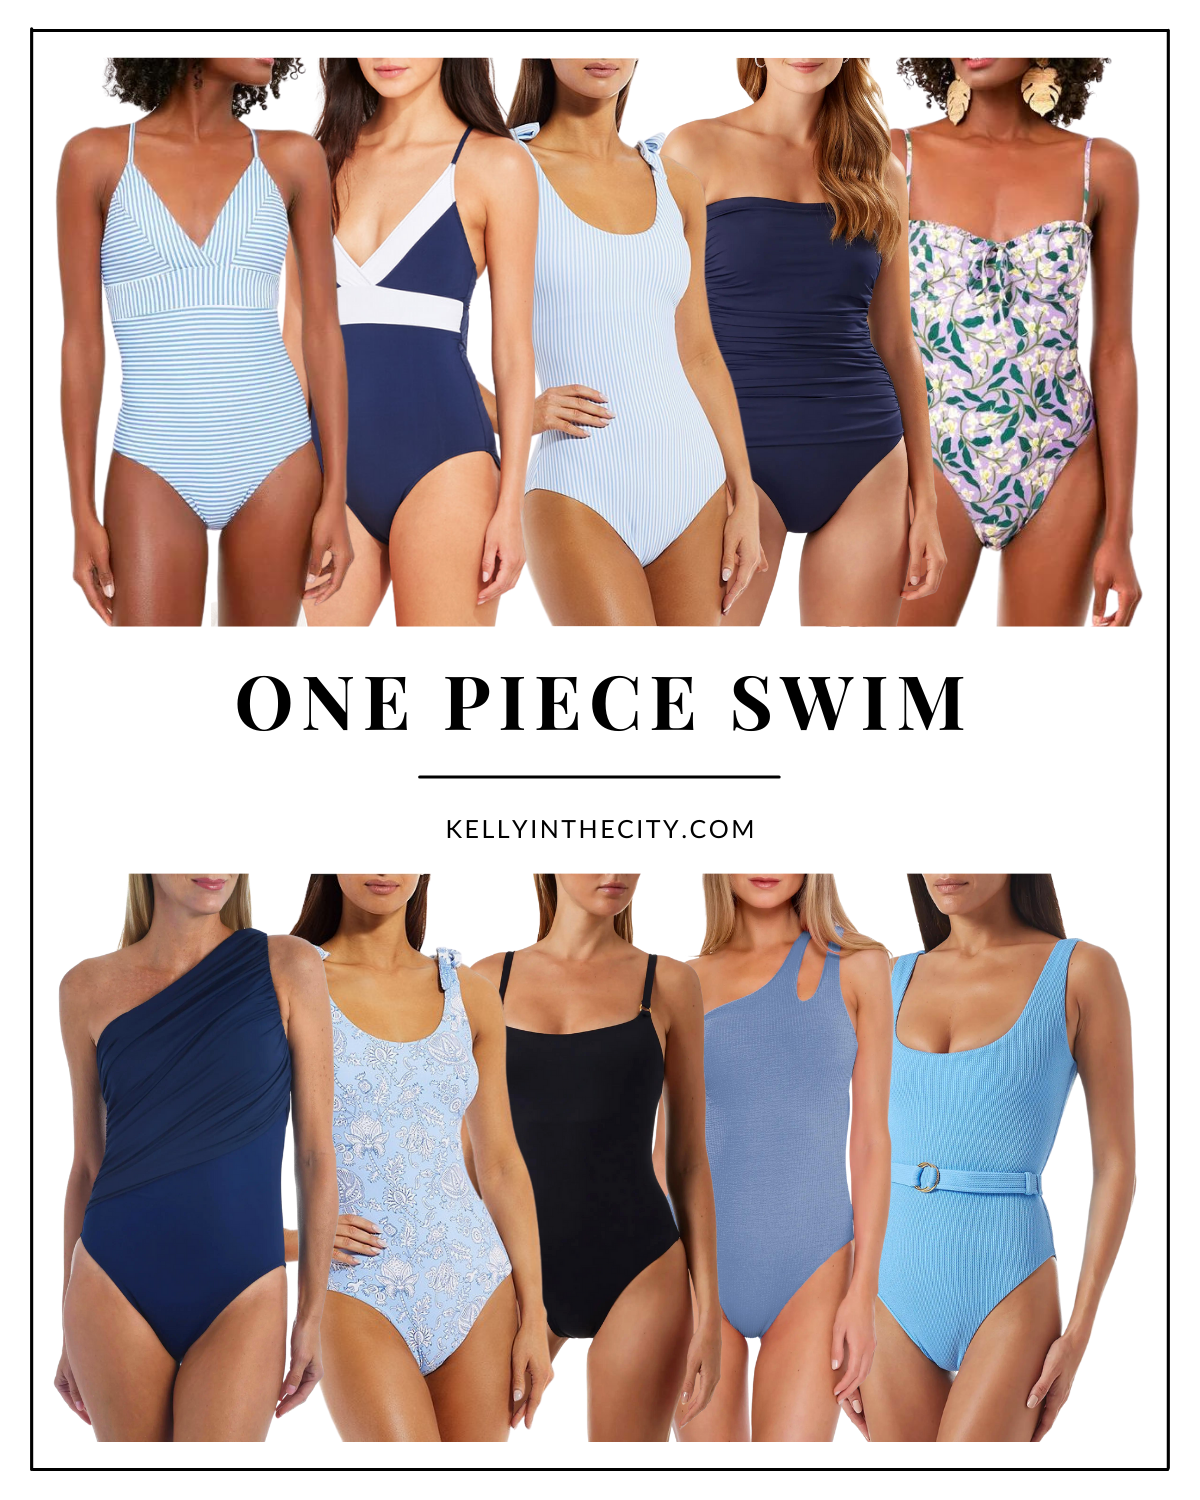 One piece swim, swimsuit, bathing suit roundup